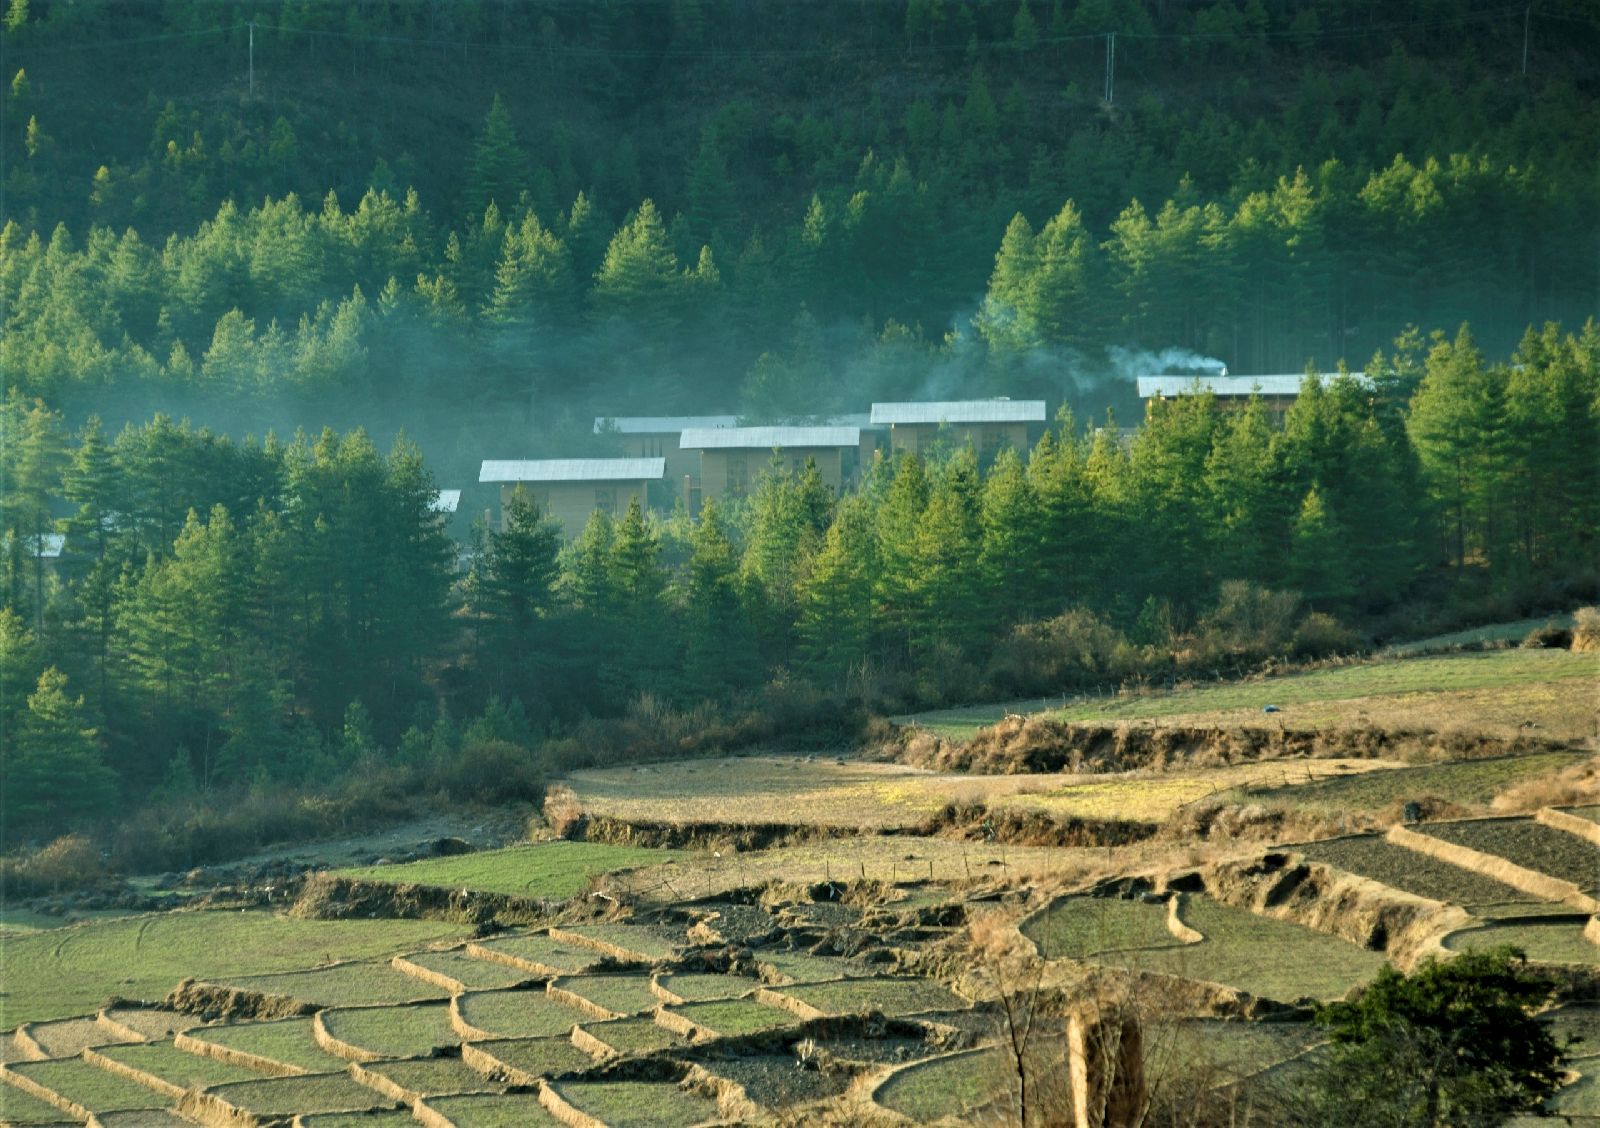 Surrounding forest and rice paddies at luxury hotel Amankora Paro in Bhutan